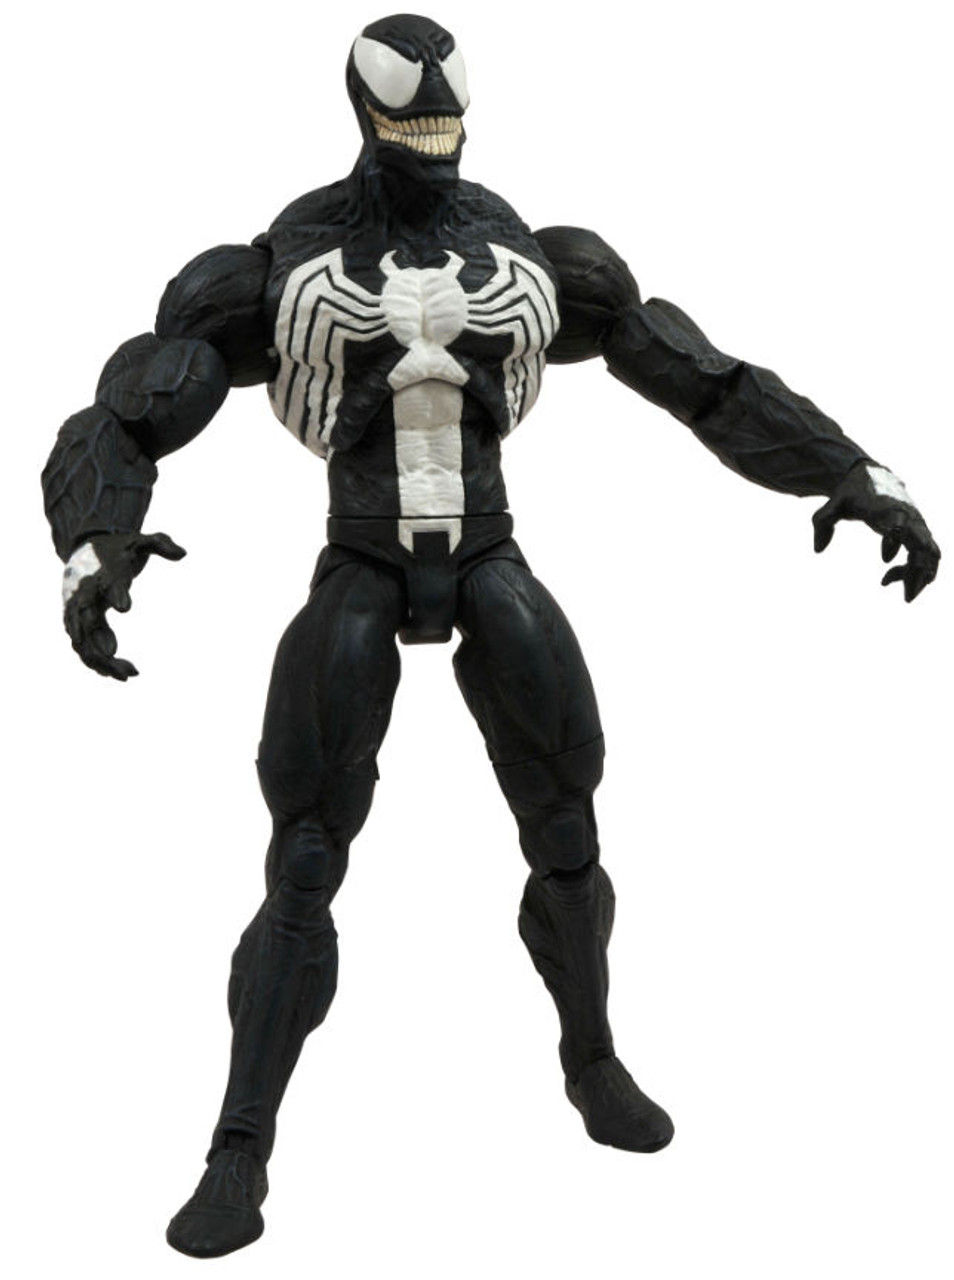 Venom Spiderman Marvel Cinematic Universe MCU Model Statue Action Figure Toy